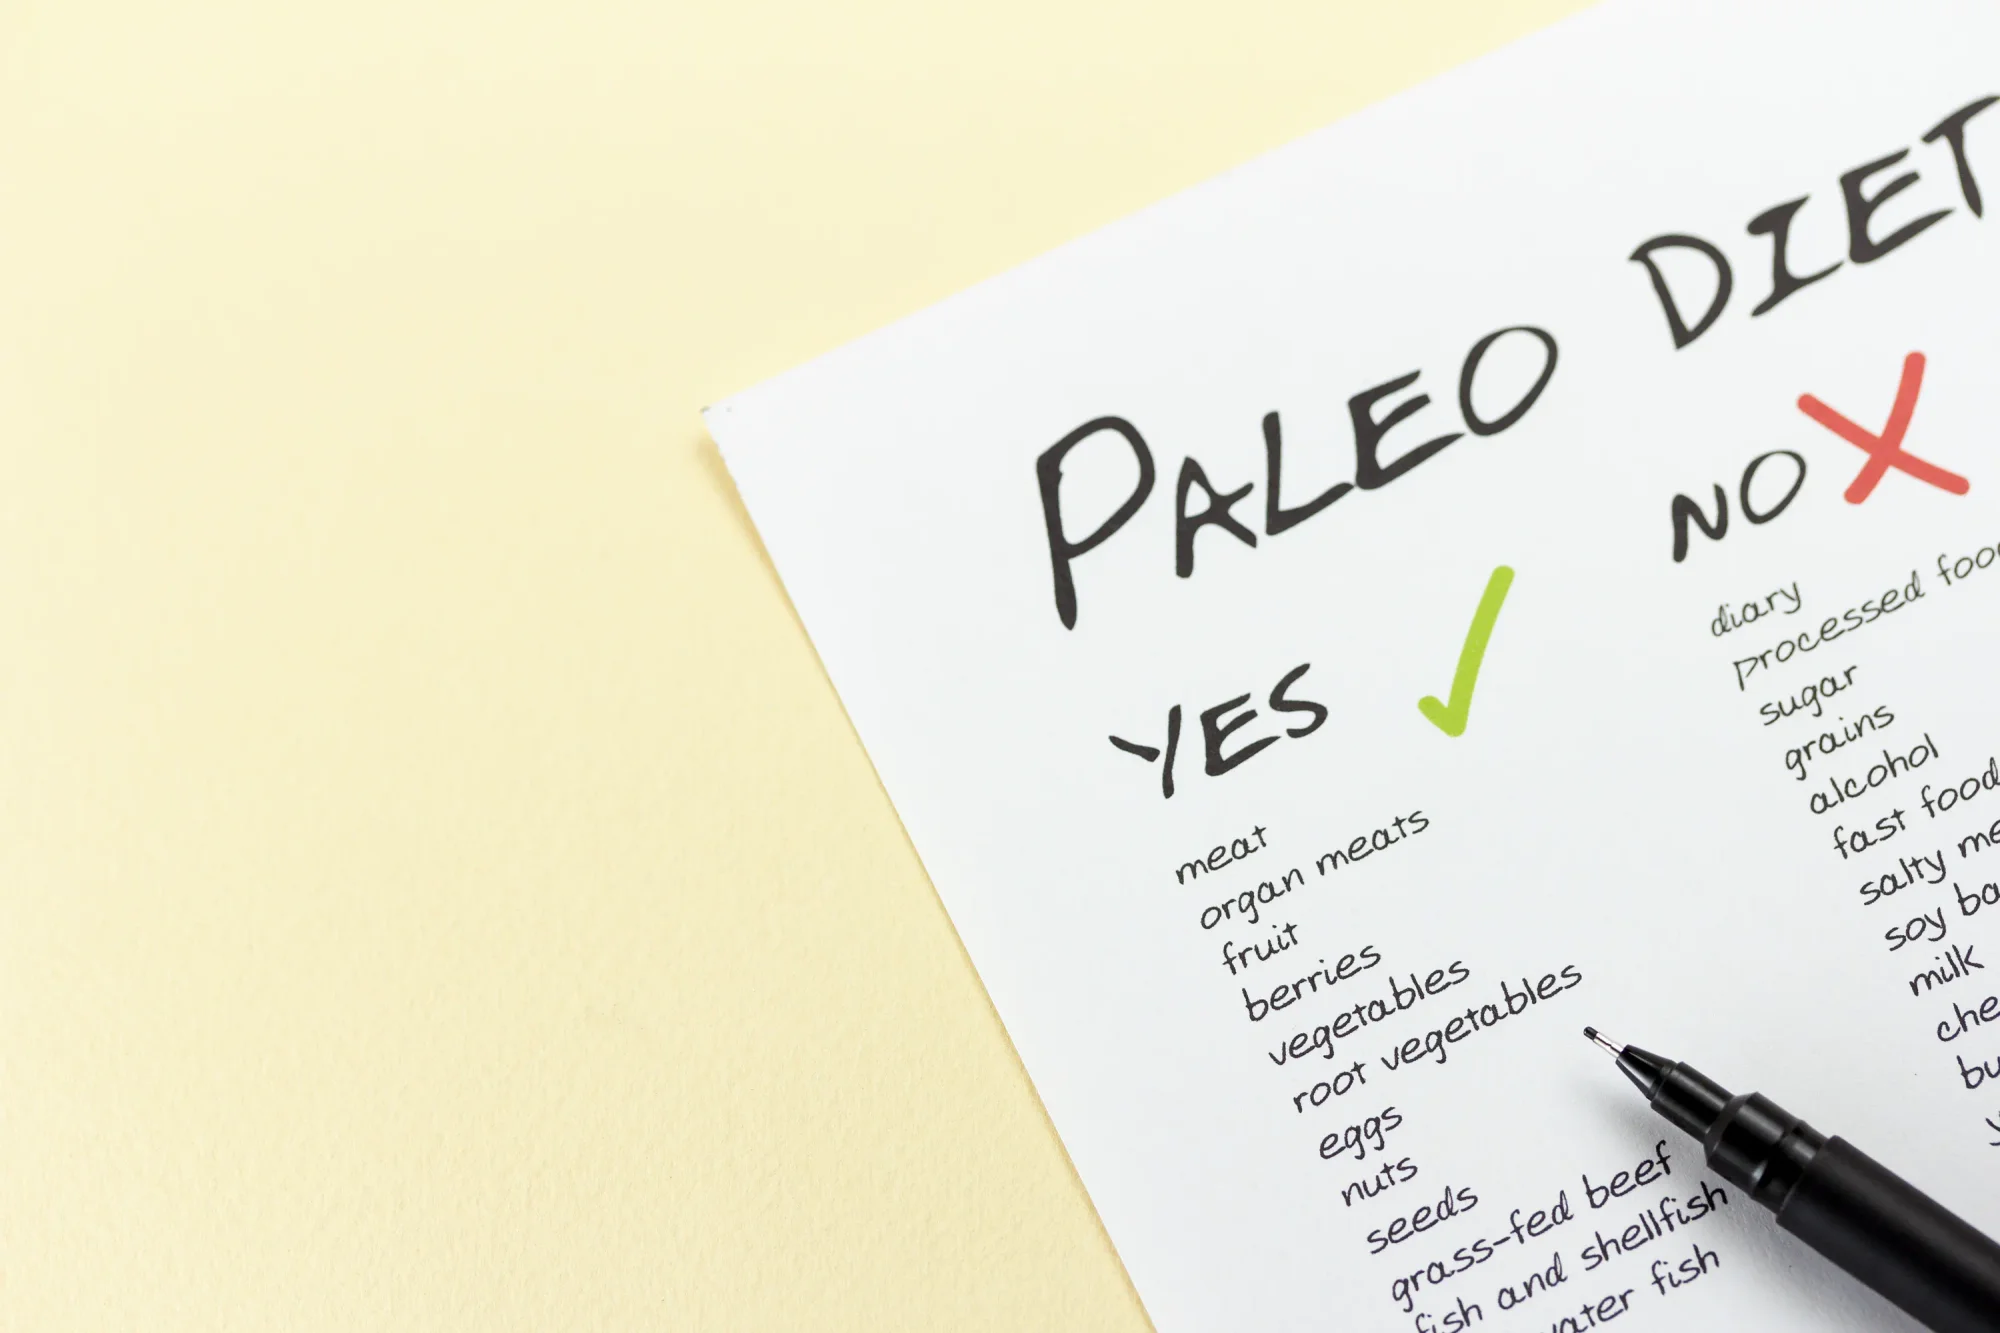 Paleo Diet: Yes and No Checklist